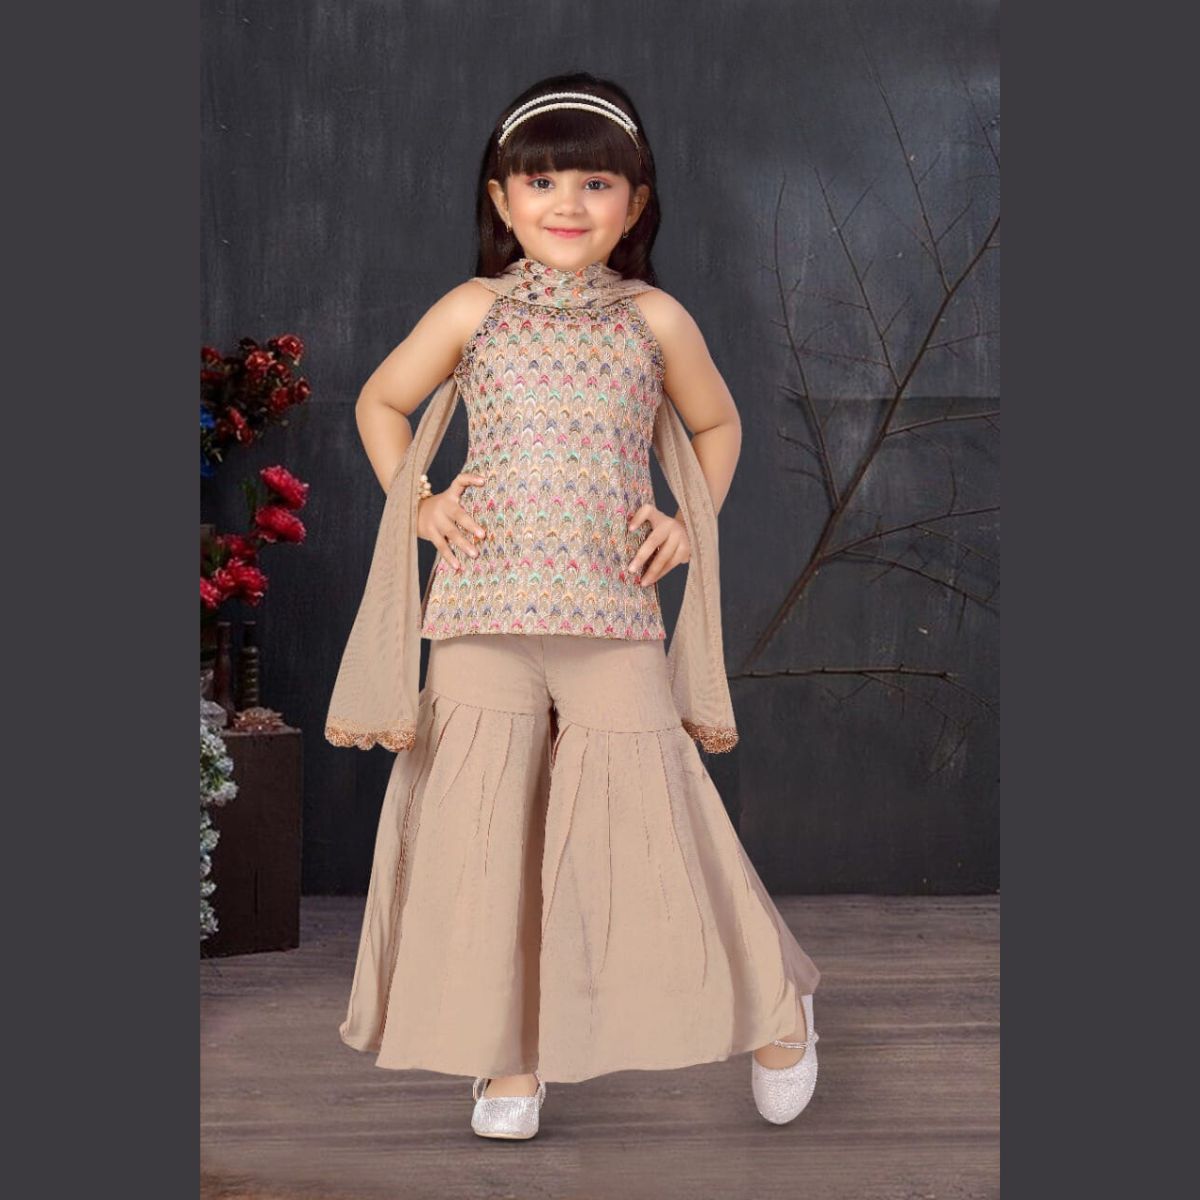 Sharara suit design 2022 for baby girls- gharara designs for girls |  Pakistani kids dresses, Baby fancy dress, Dresses kids girl